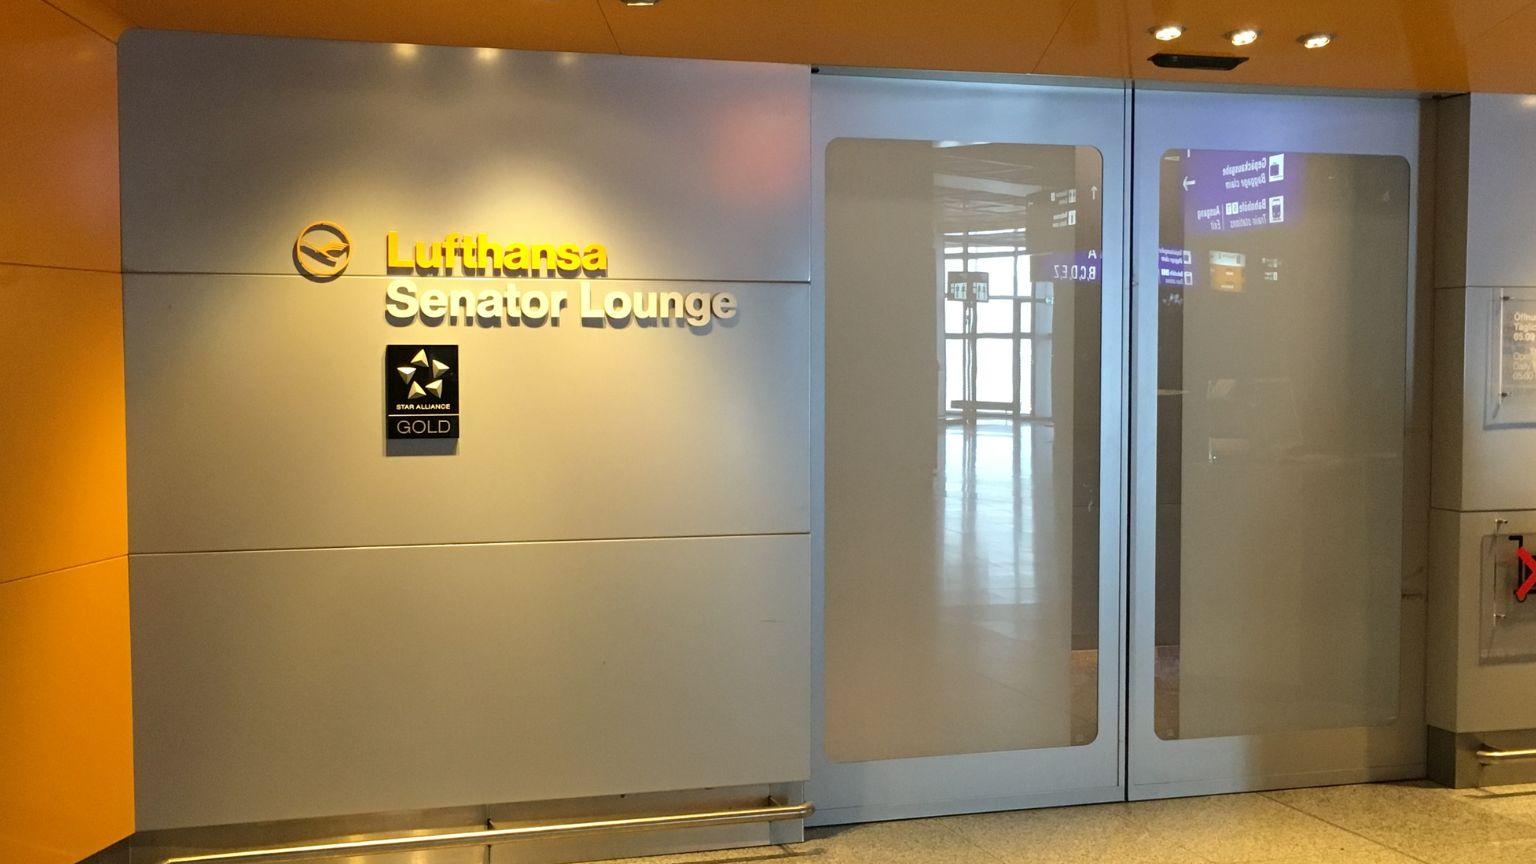 Lufthansa Senator Lounge, Terminal 1